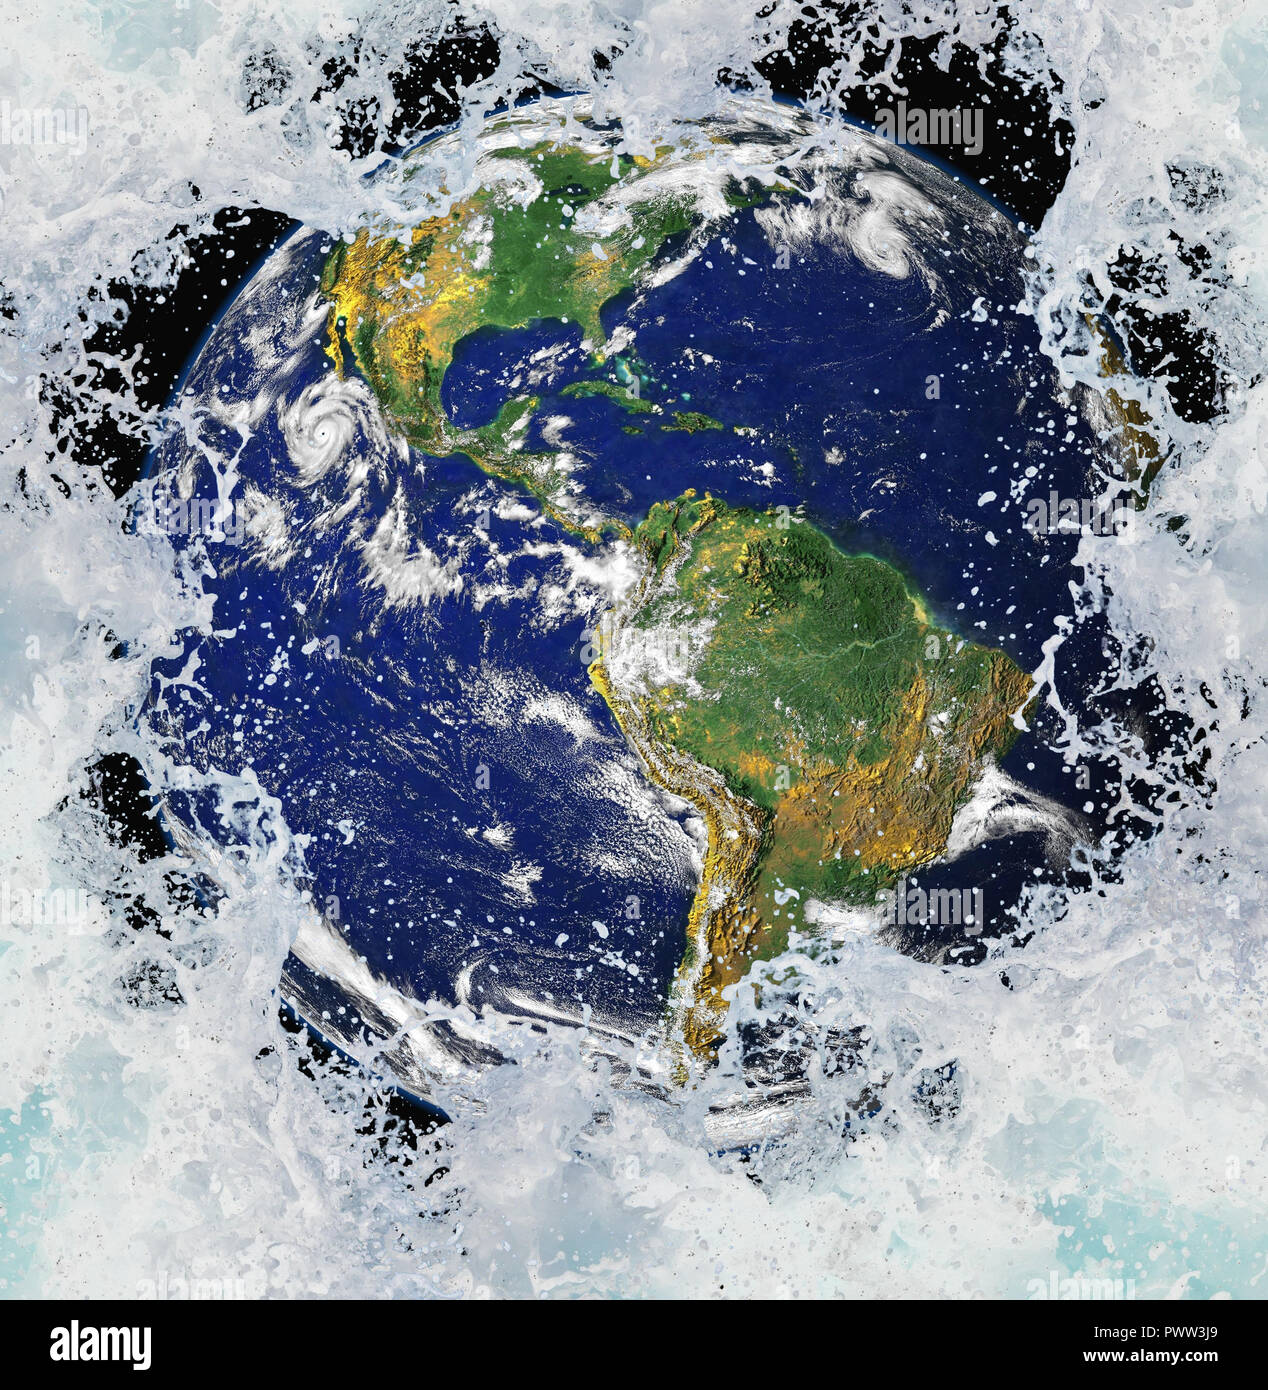 Global warming - earth drowning in rising seas Stock Photo